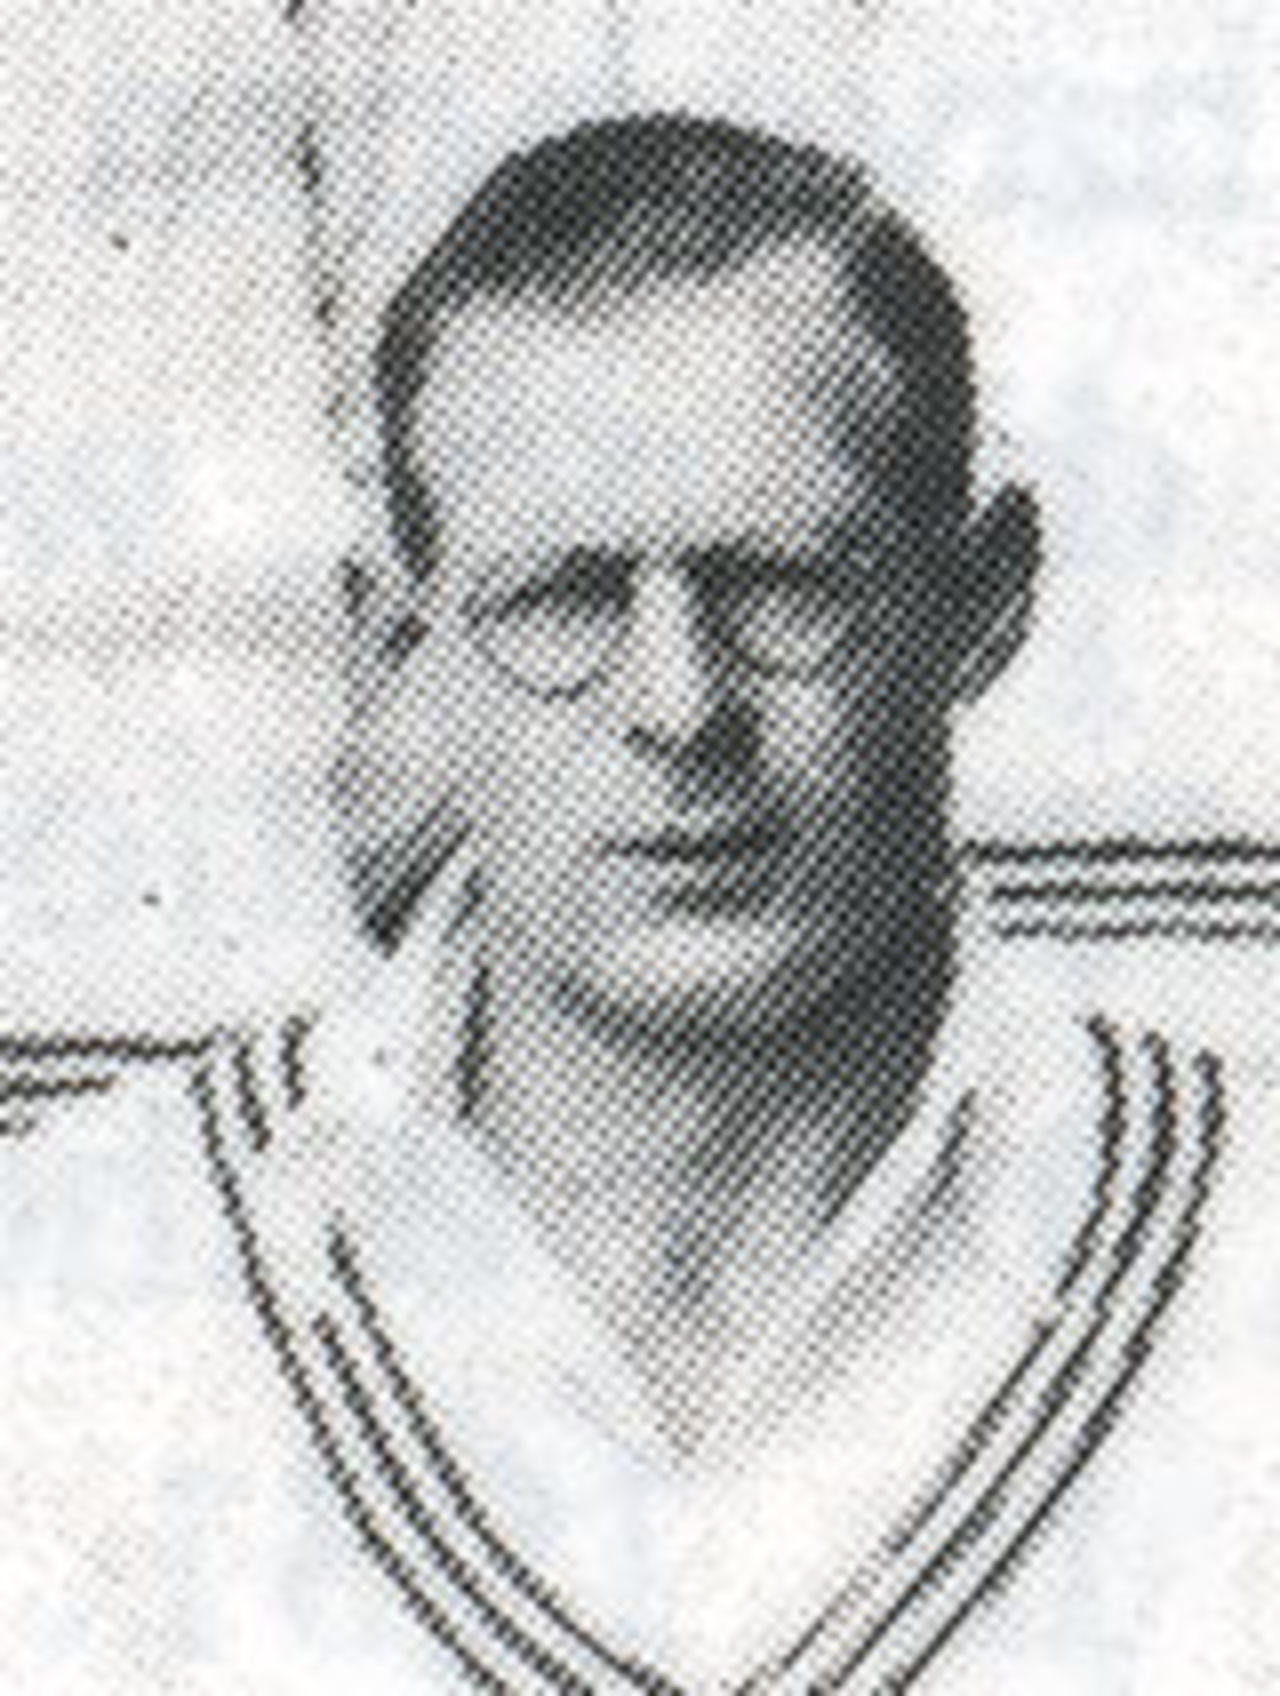 Jack Kerr on the 1937 tour of England